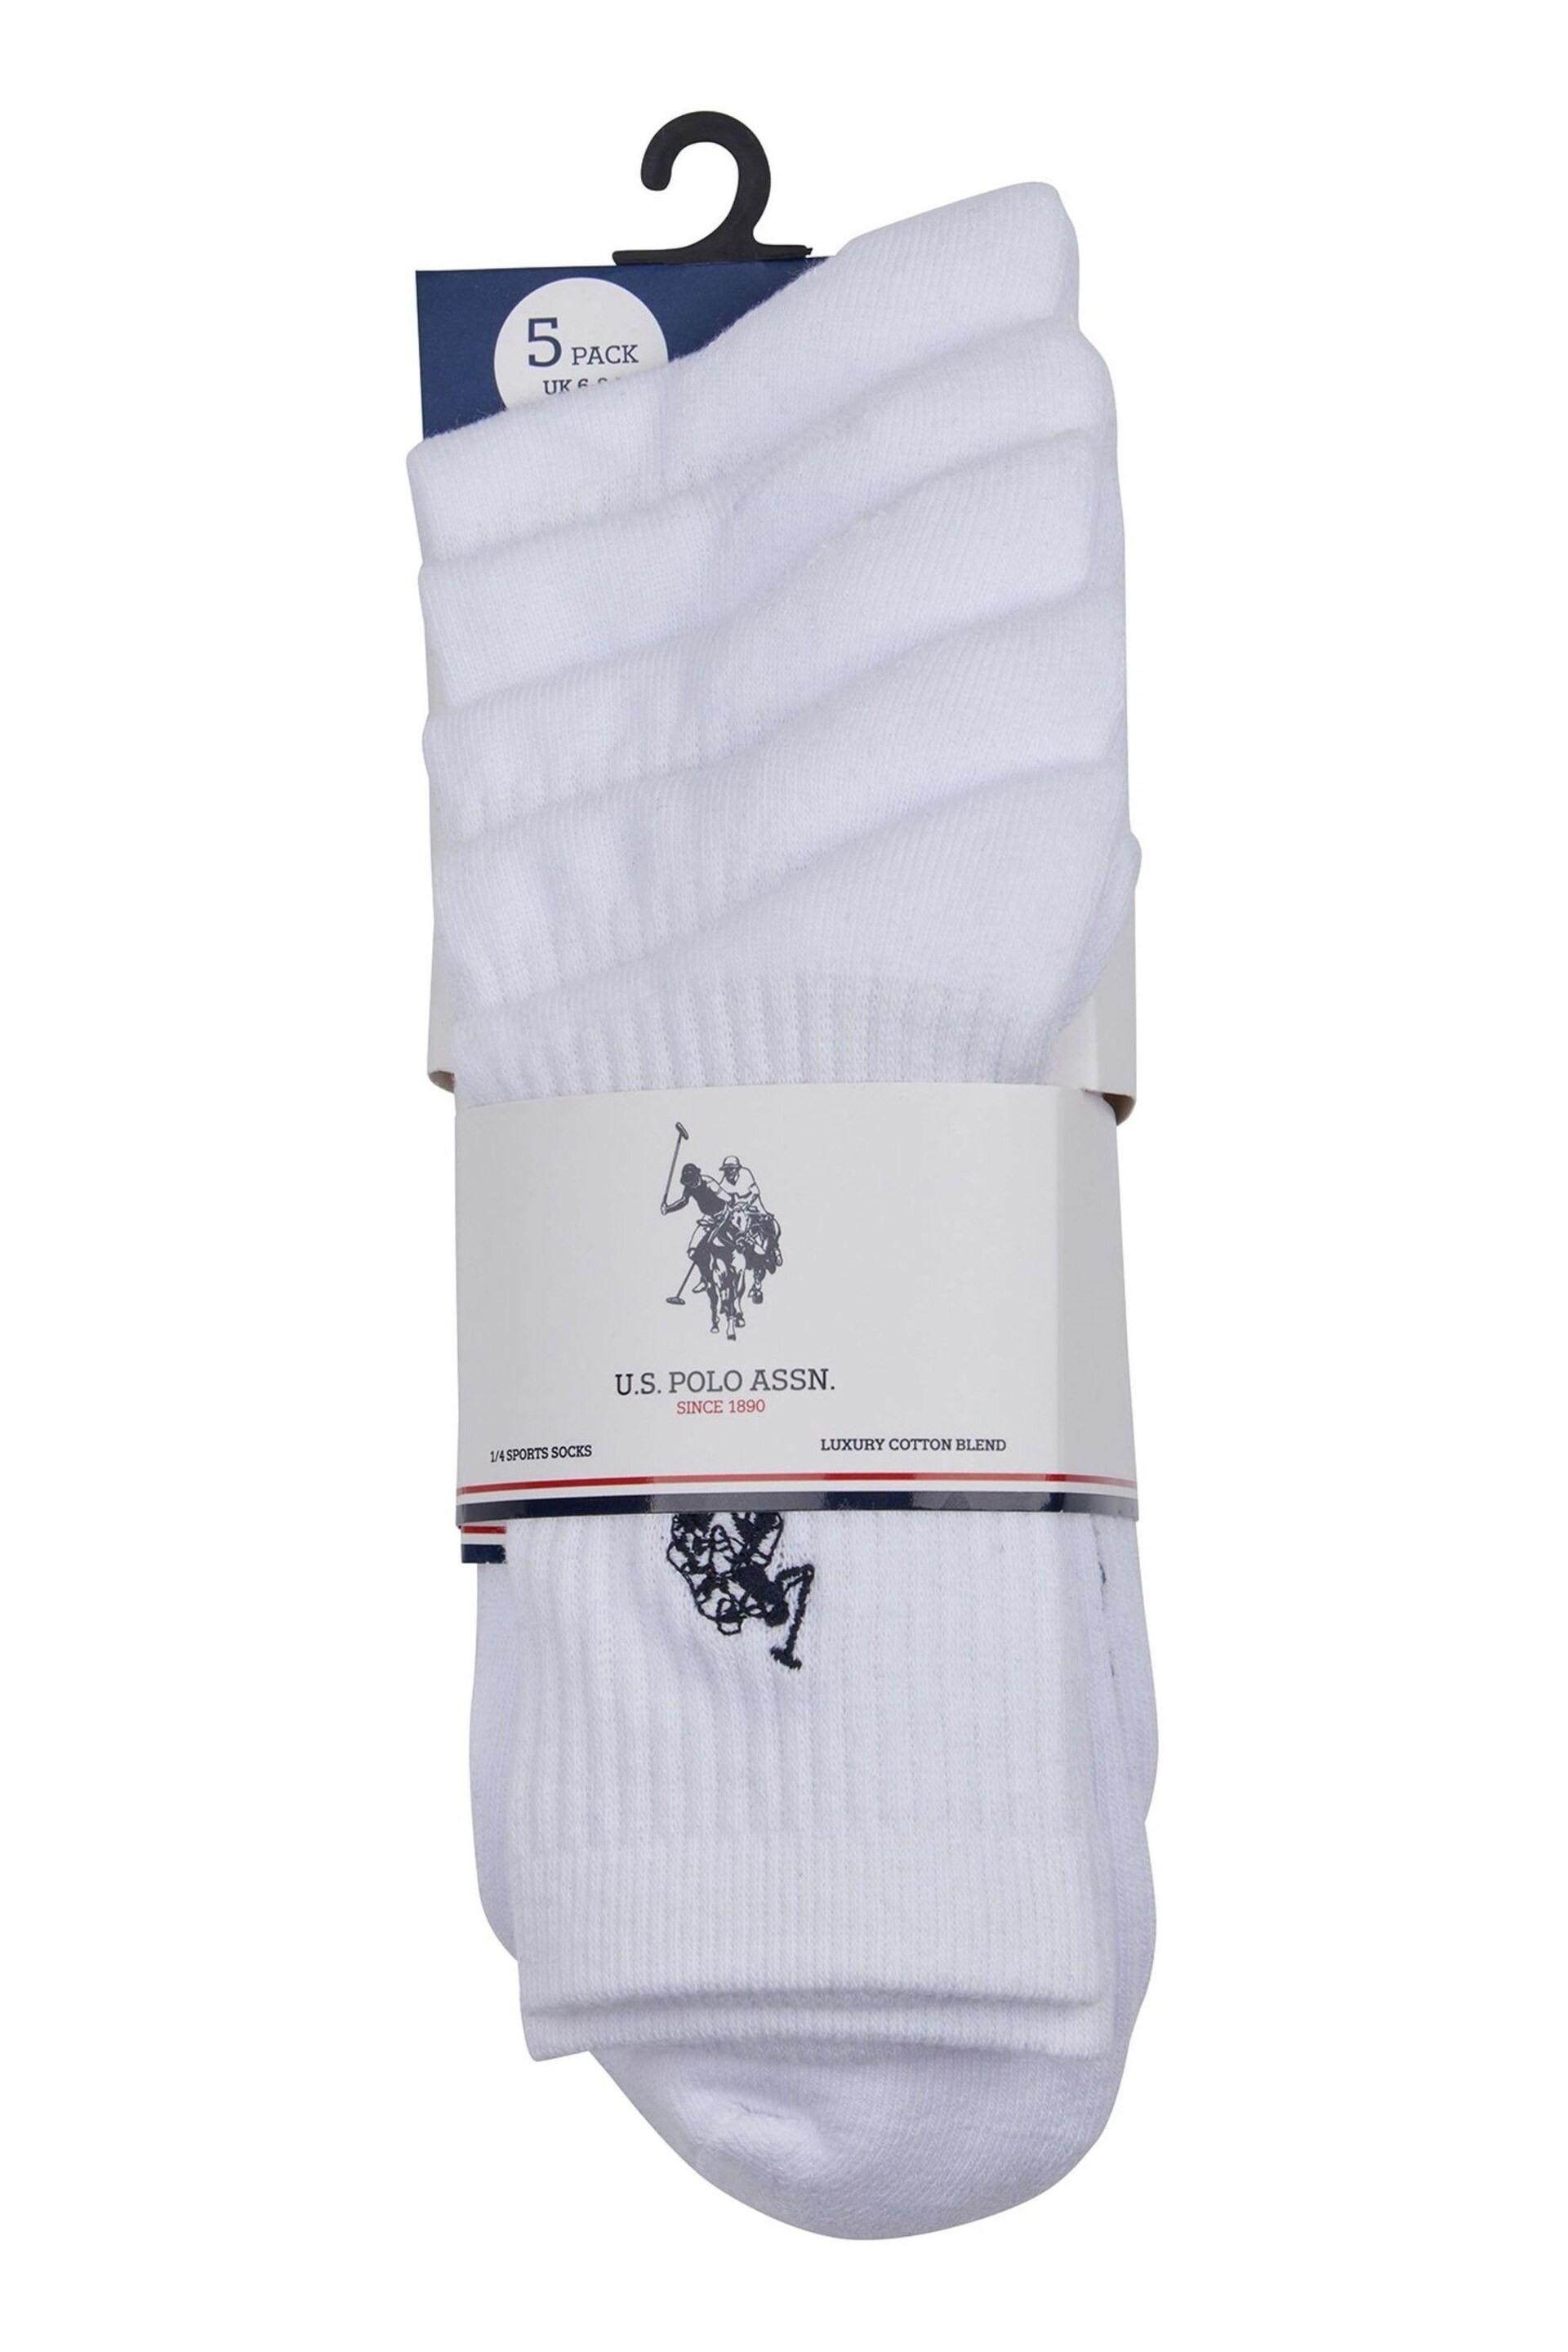 U.S. Polo Assn. Mens Quarter Sports White Socks 5 Pack - Image 2 of 3